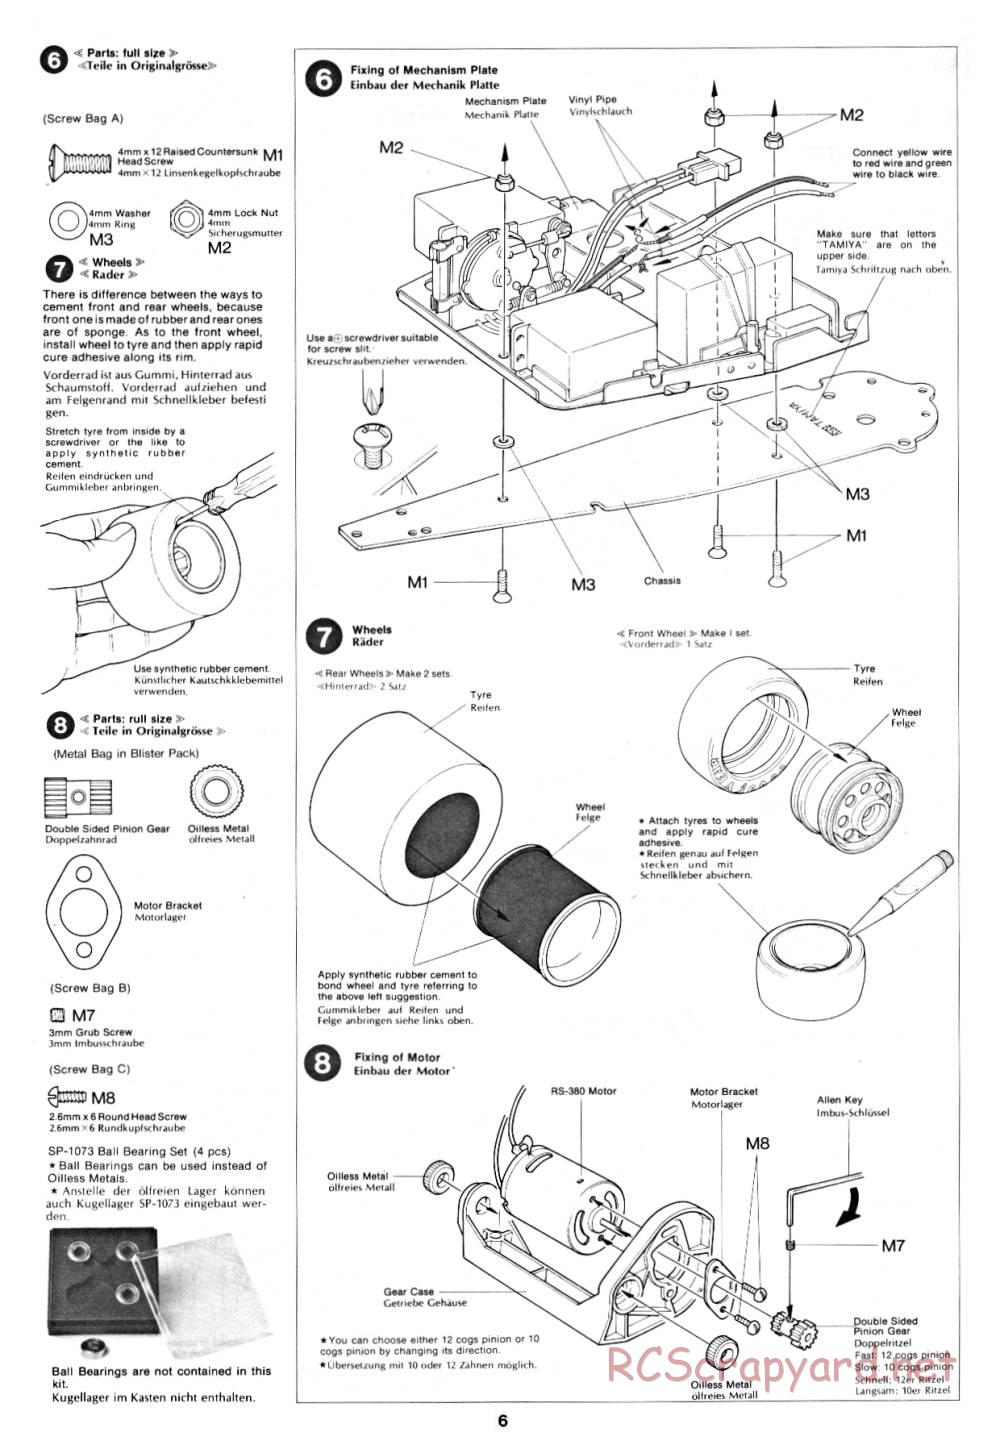 Tamiya - B2B Racing Sidecar - 58017 - Manual - Page 6